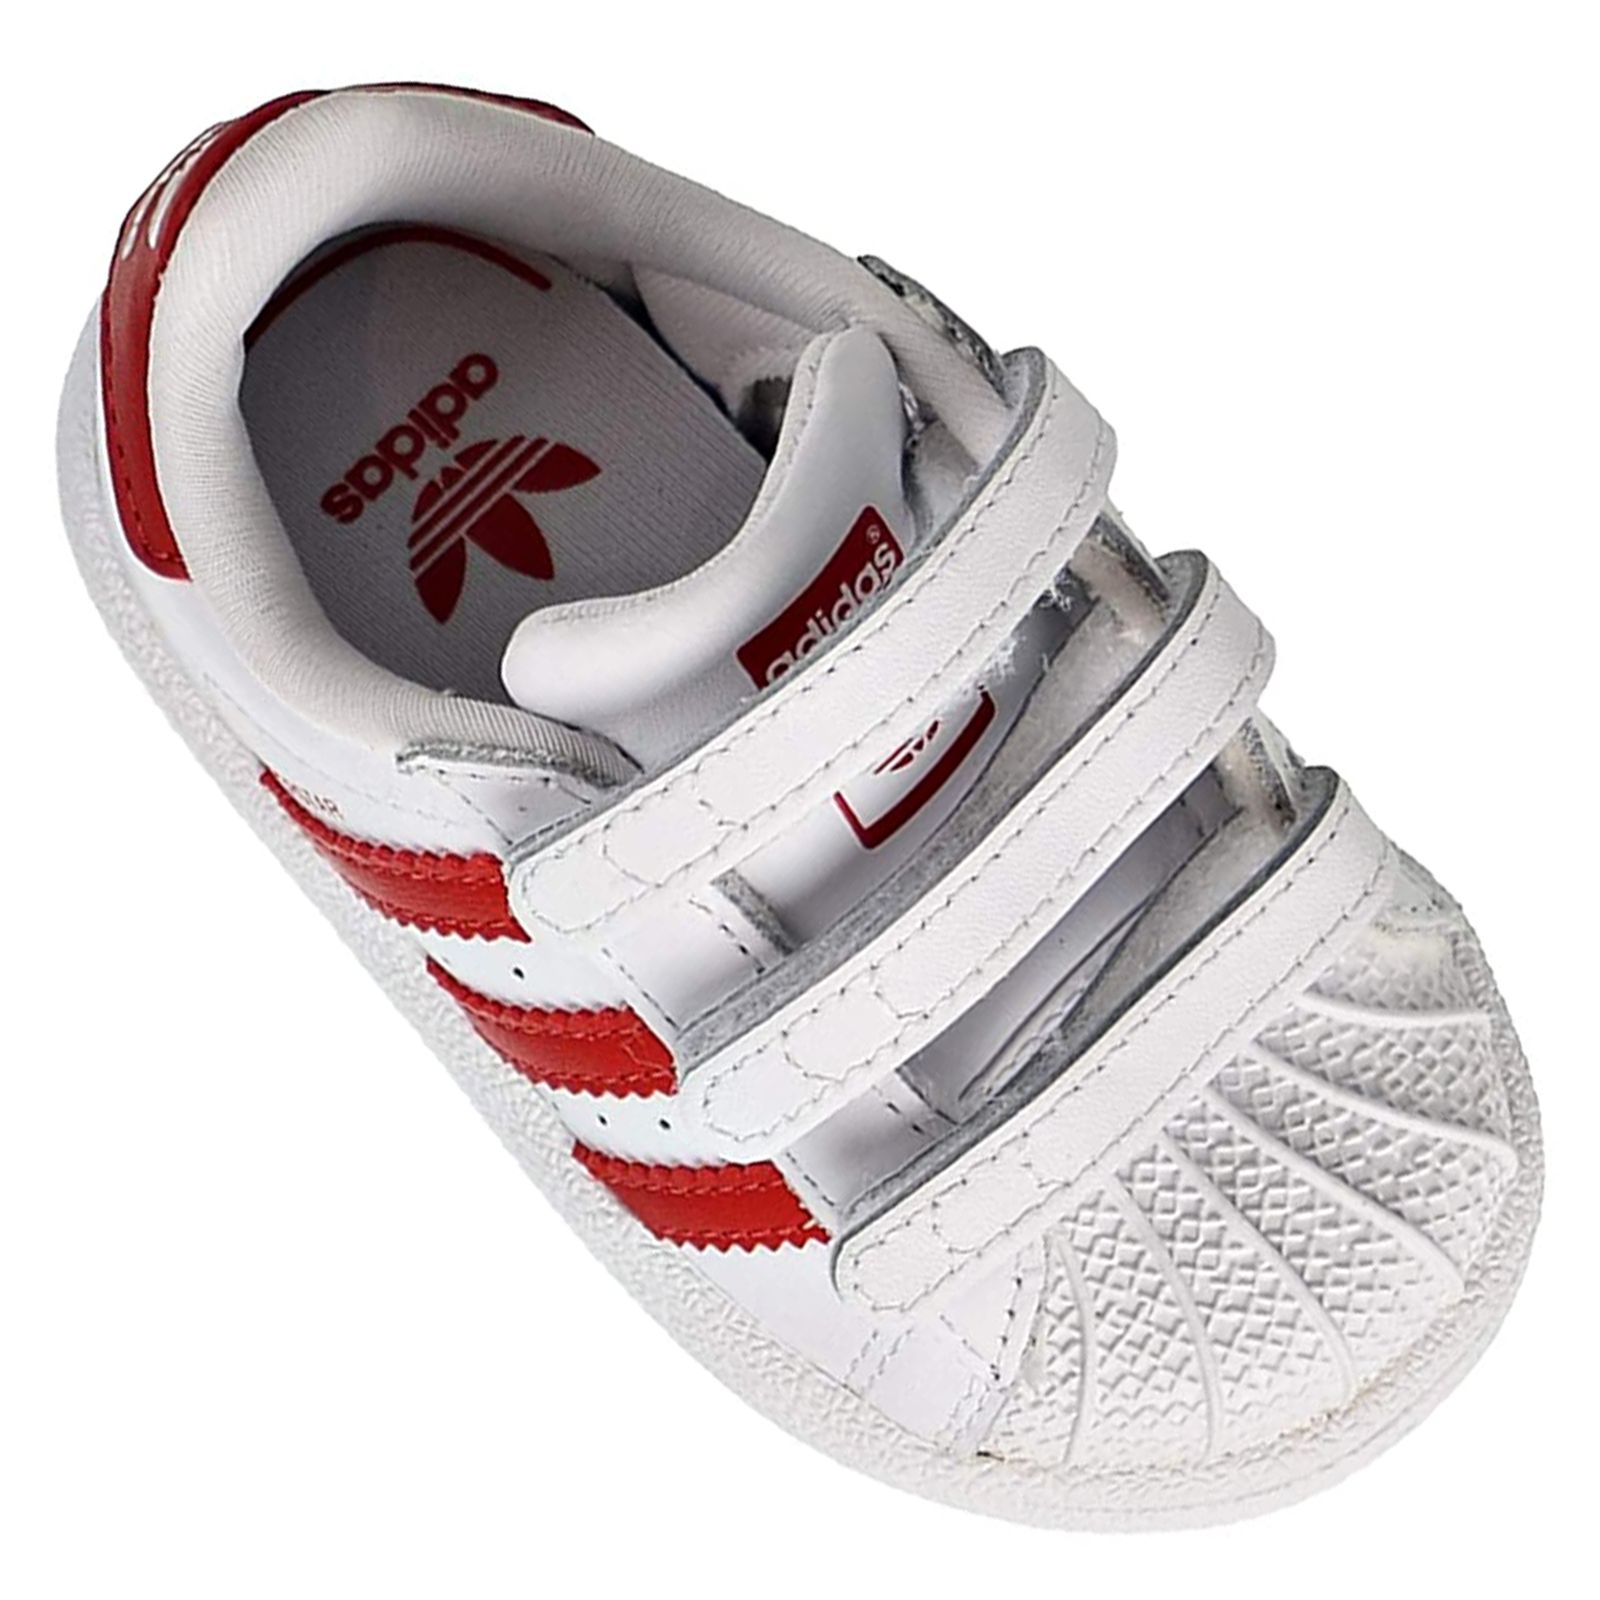 22 Mädchen Schuhe Kinder DURCHSTARTEER | Superstar adidas Sneaker Turnschuhe Weiß Rot Jungen